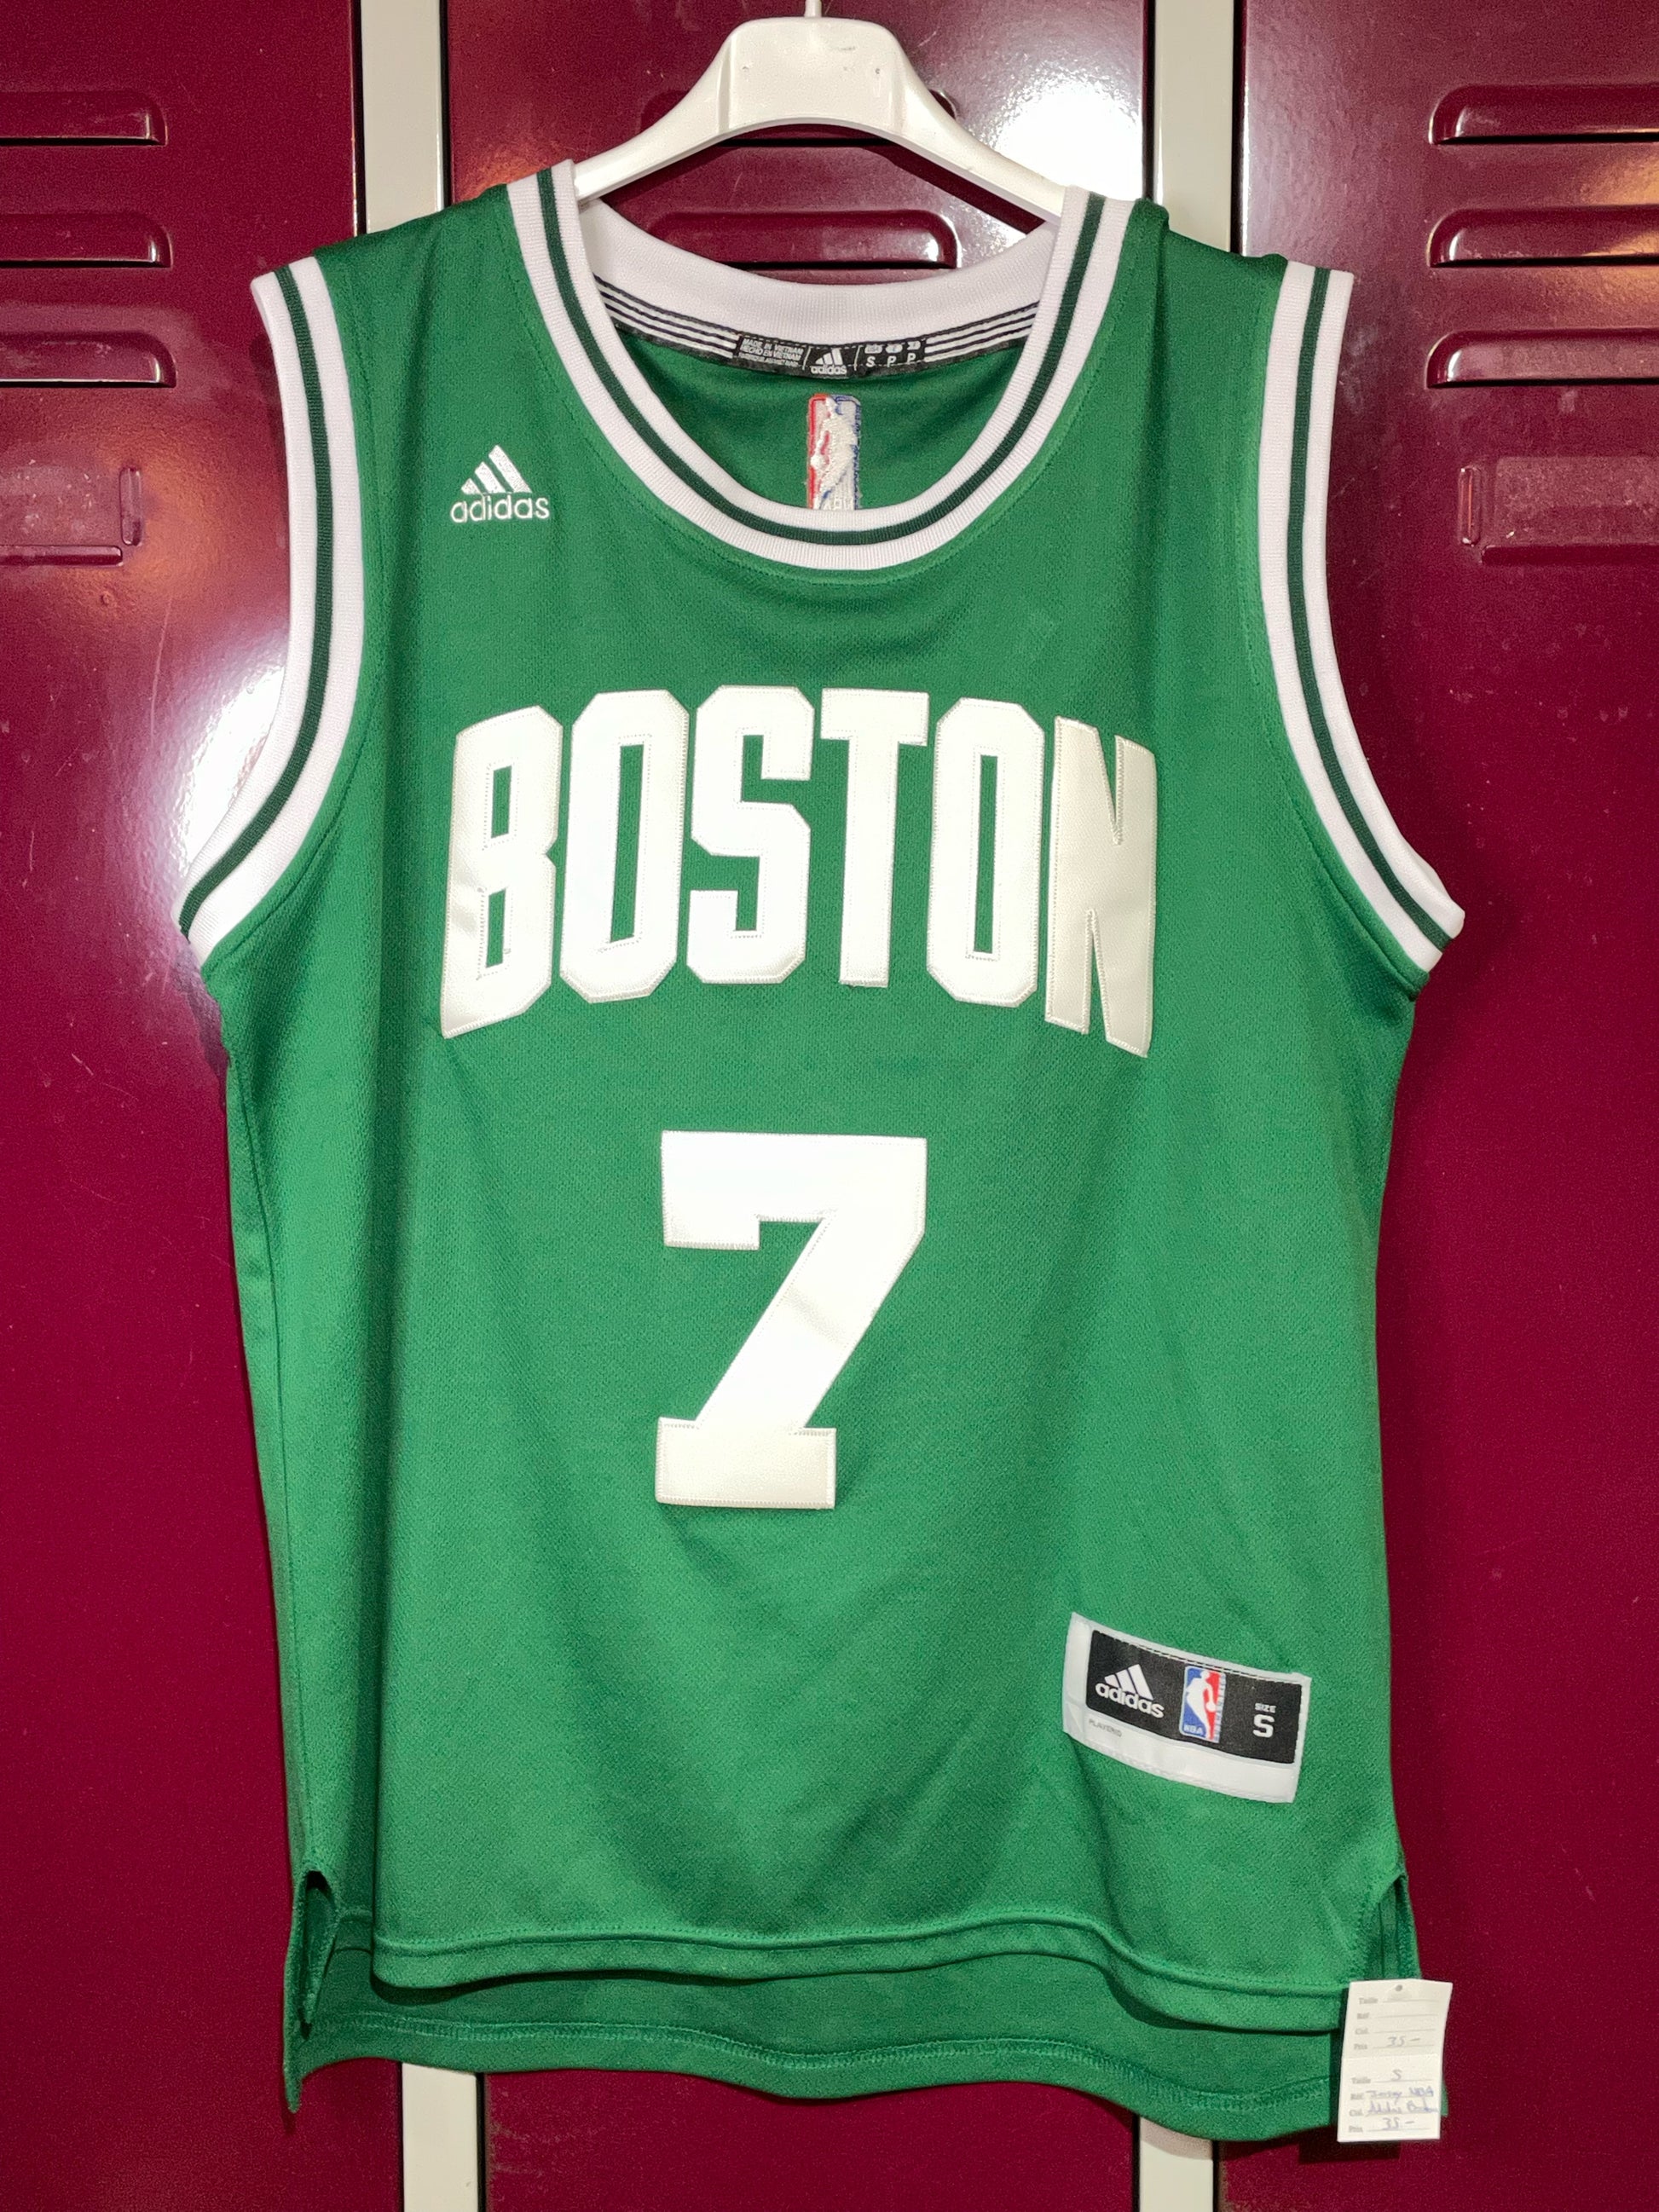 Boston Celtics Gear, Celtics Jerseys, Store, Celtics Shop, Apparel